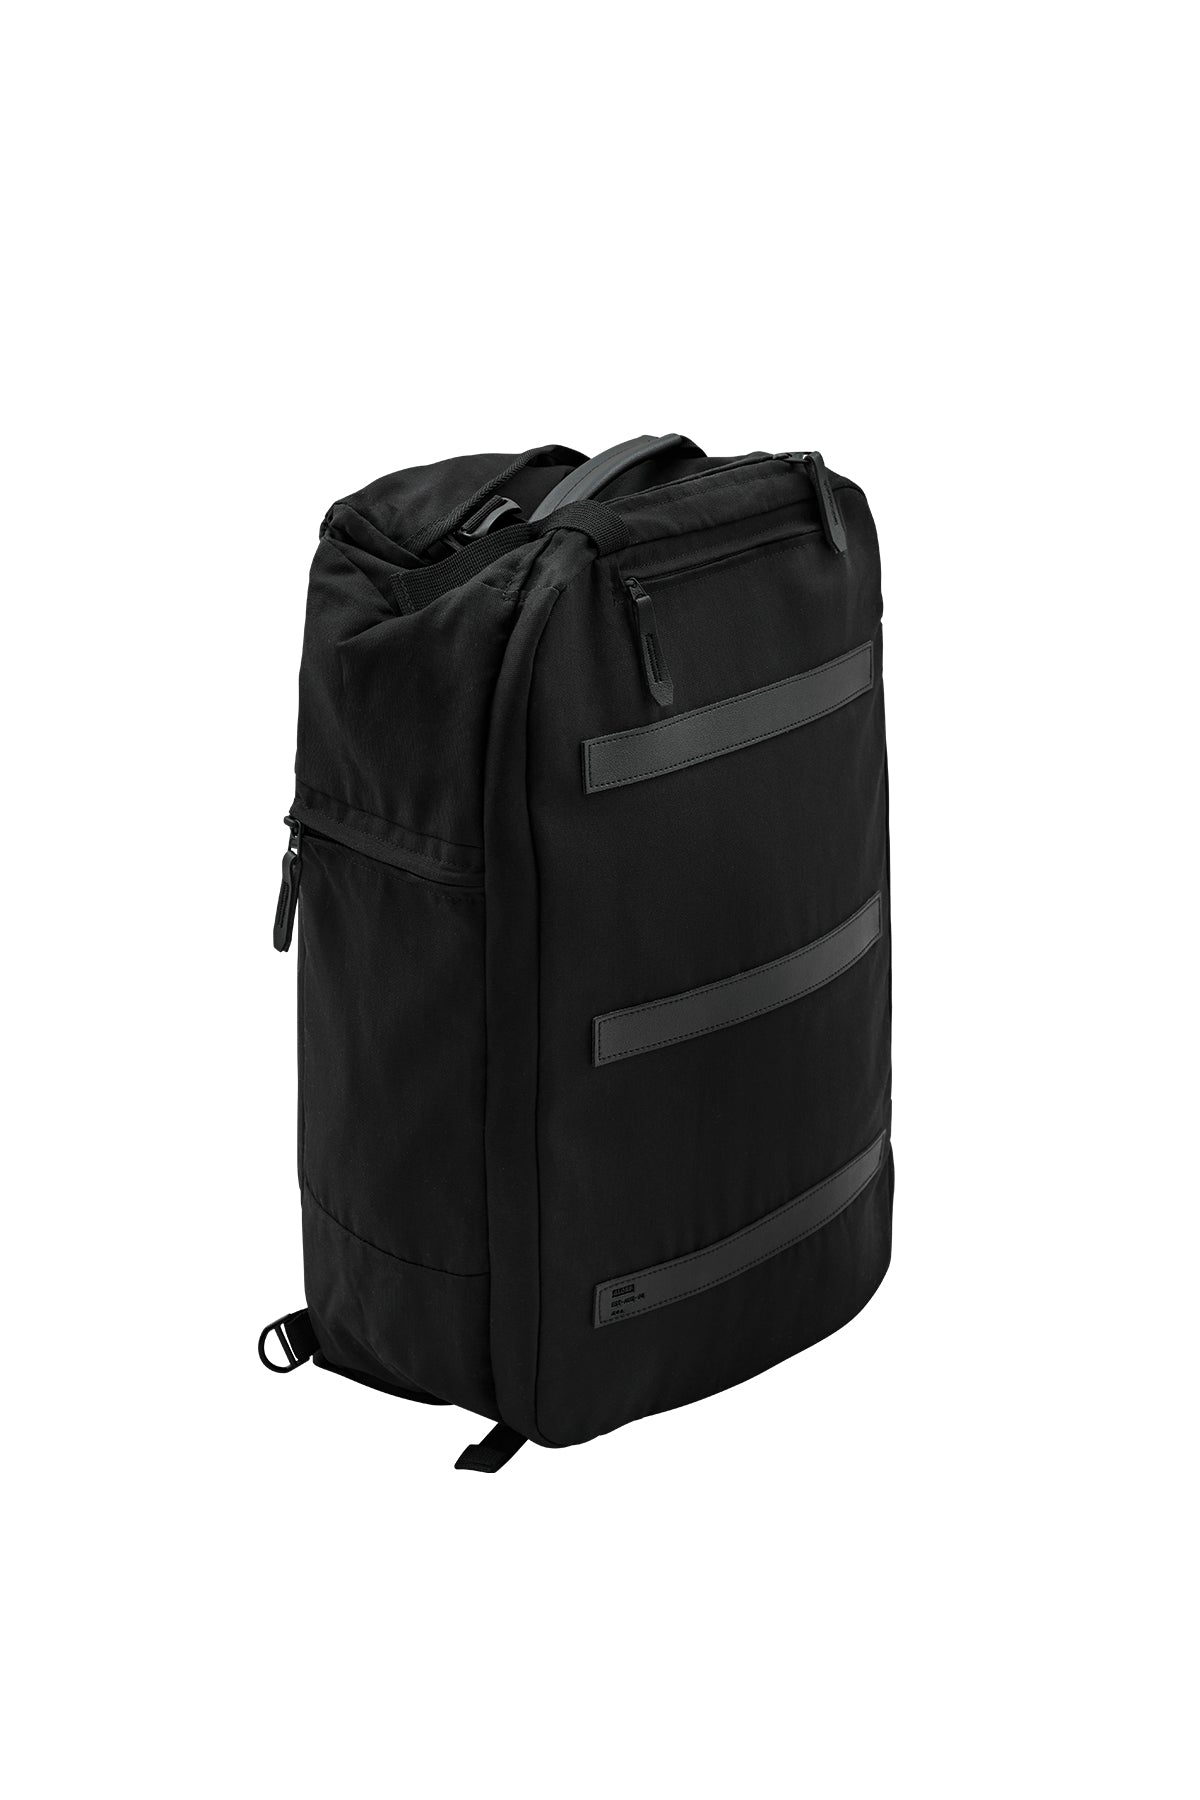 front facing of Globe Black 3 in 1 traveler bag